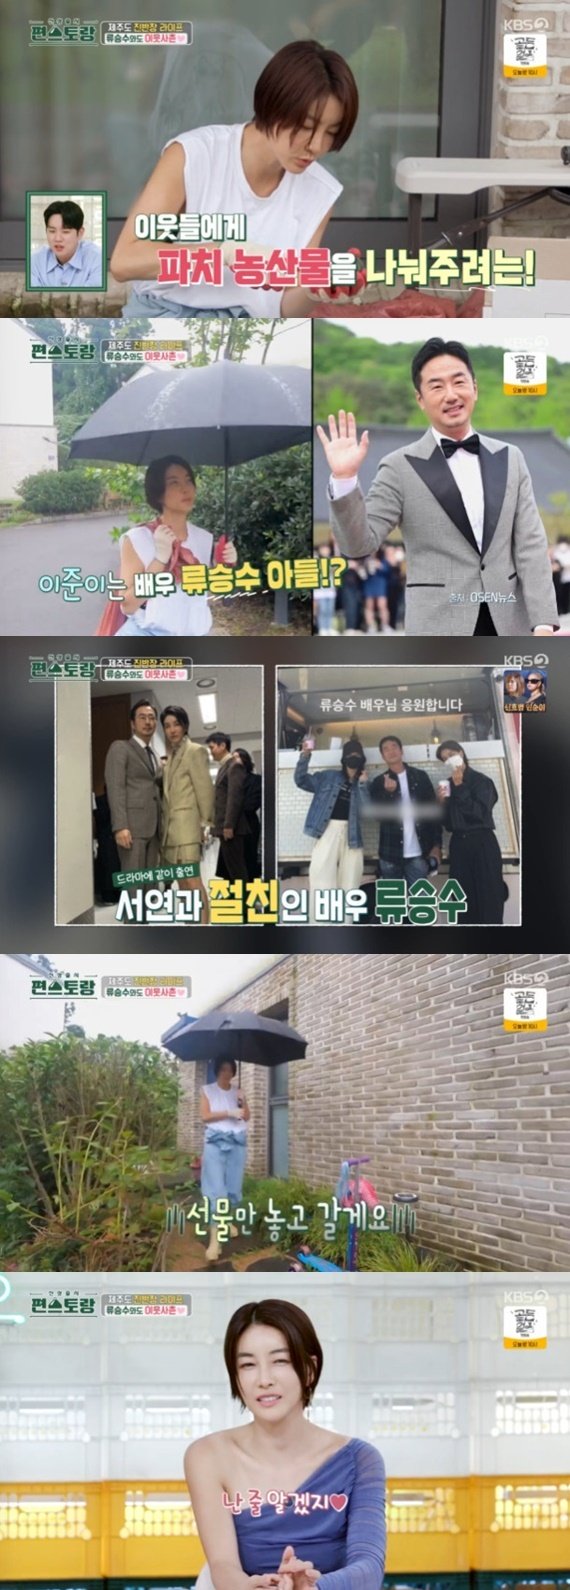 KBS2TV '신상출시 편스토랑' 캡처